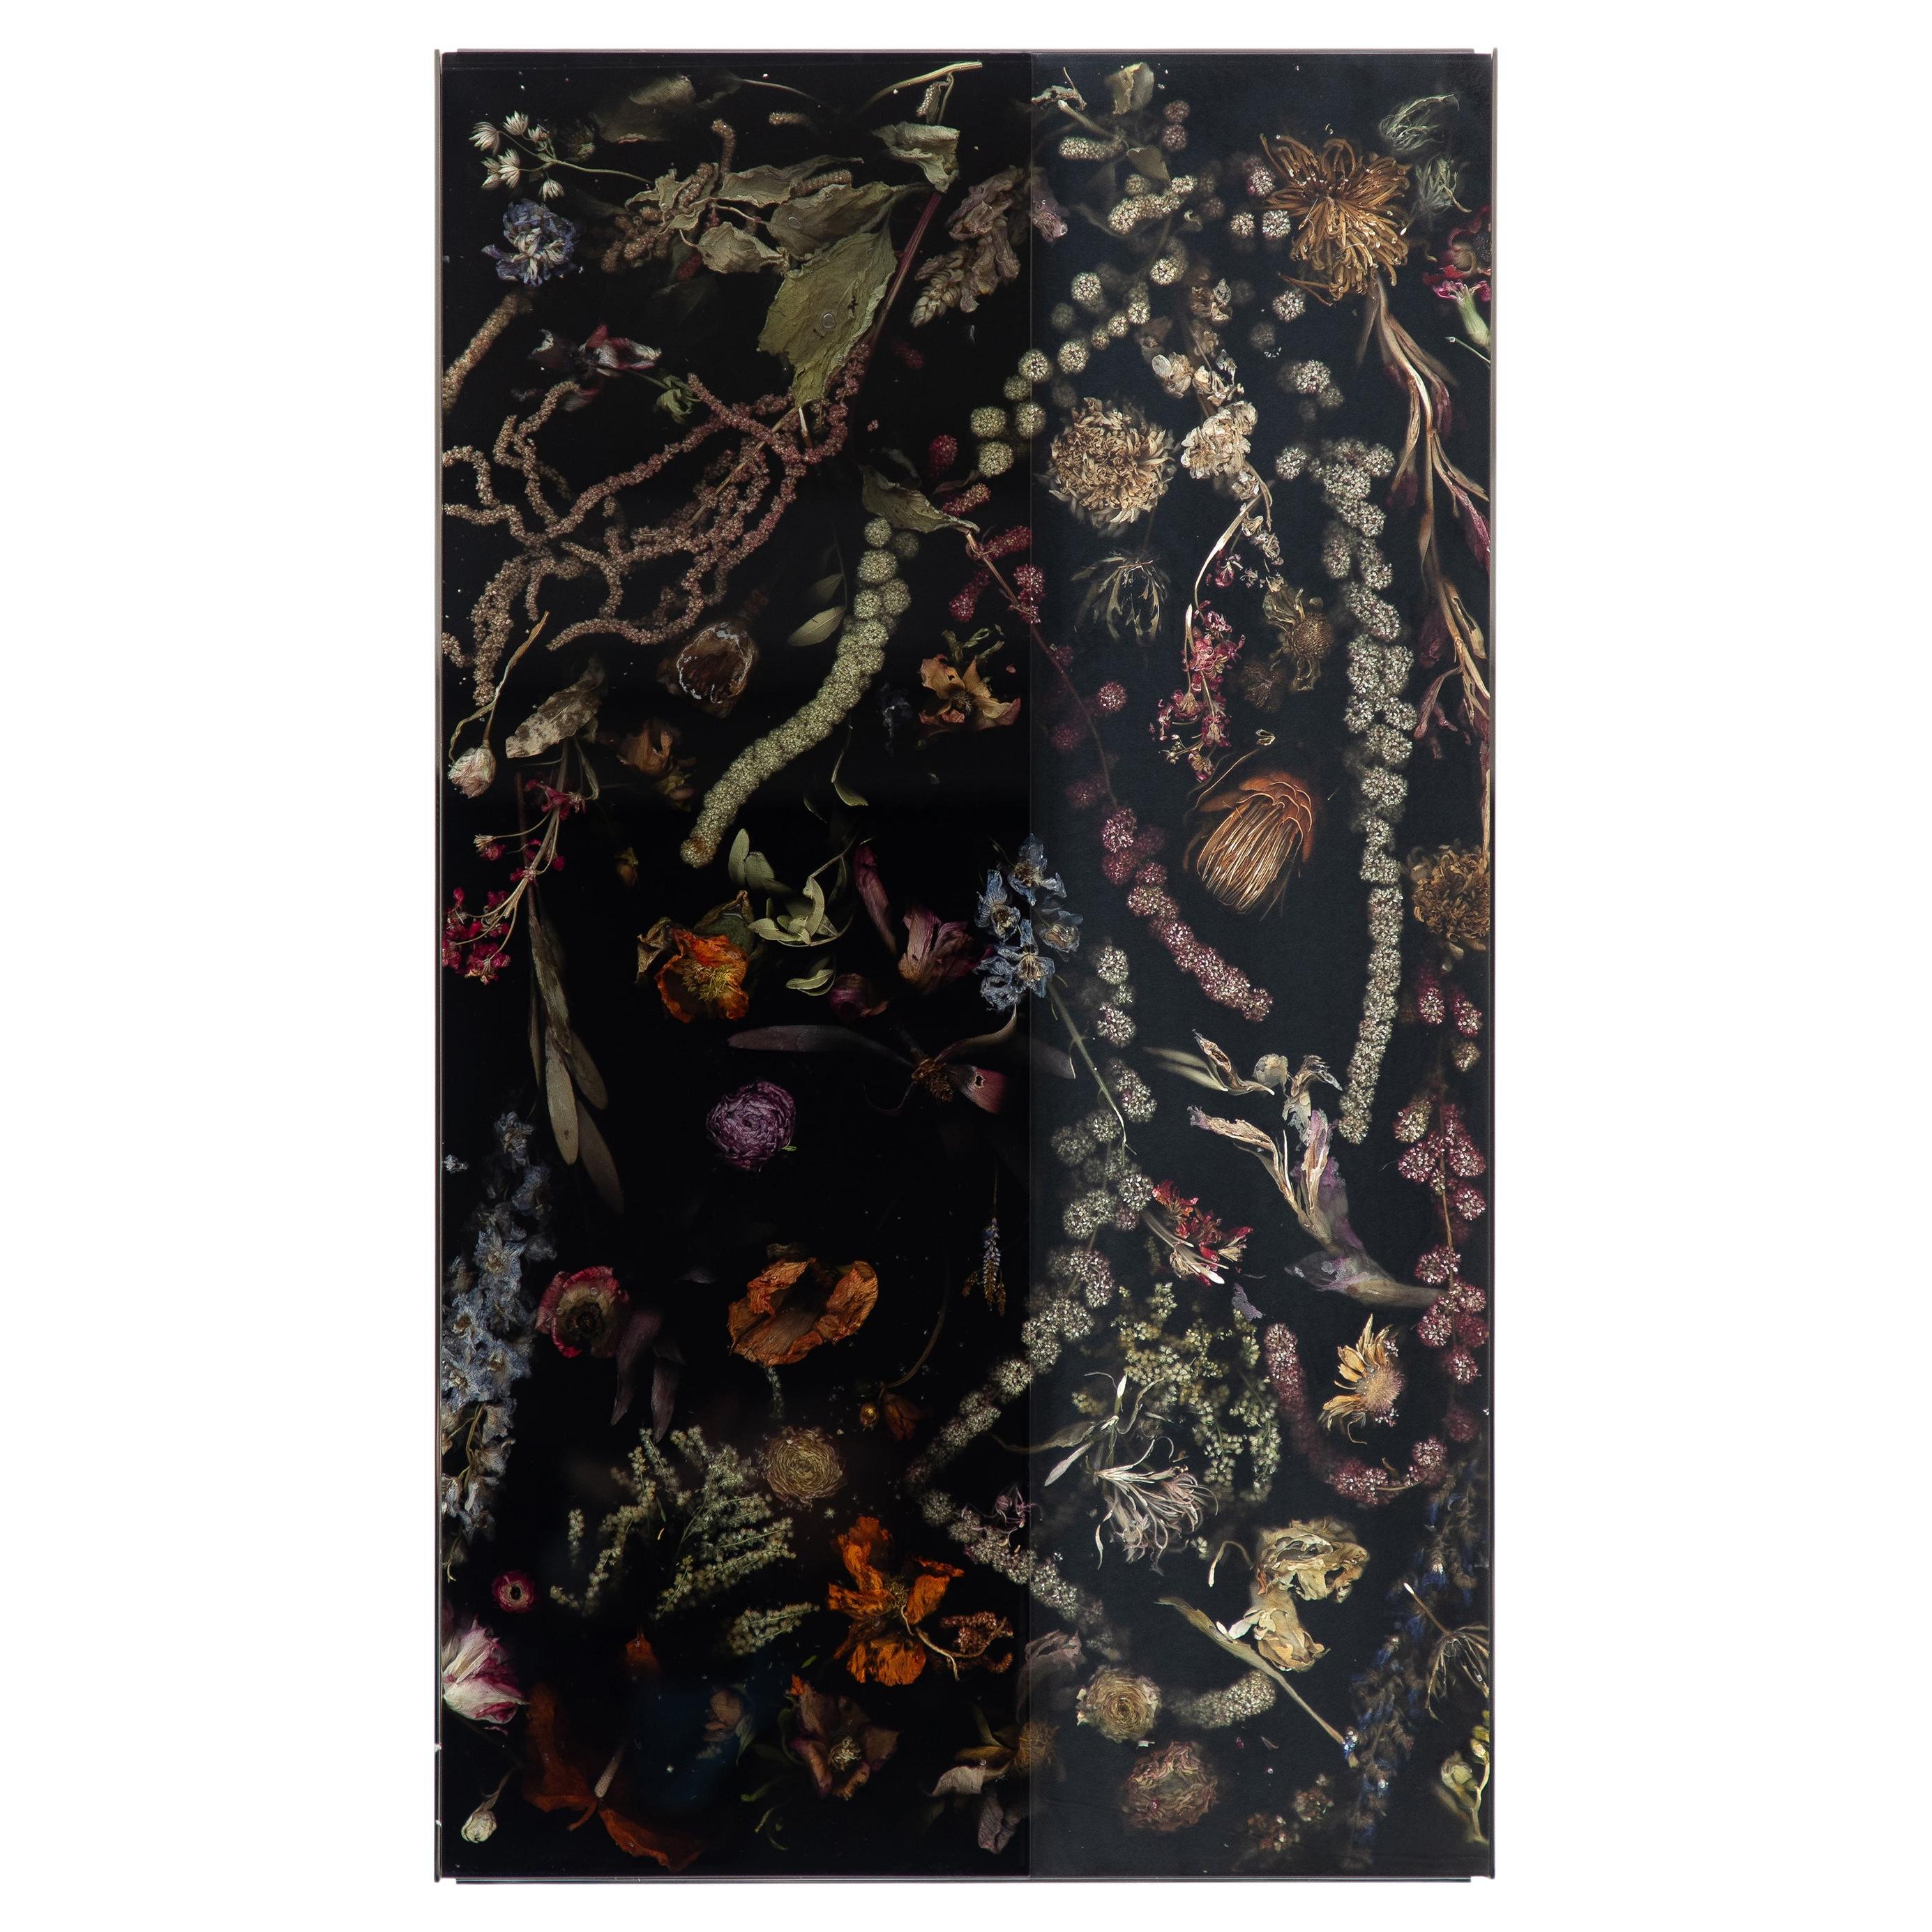 Marcin Rusak, Flora Wandbehangsstück 46, schwarz polierte/matte Oberfläche, auf Lager im Angebot